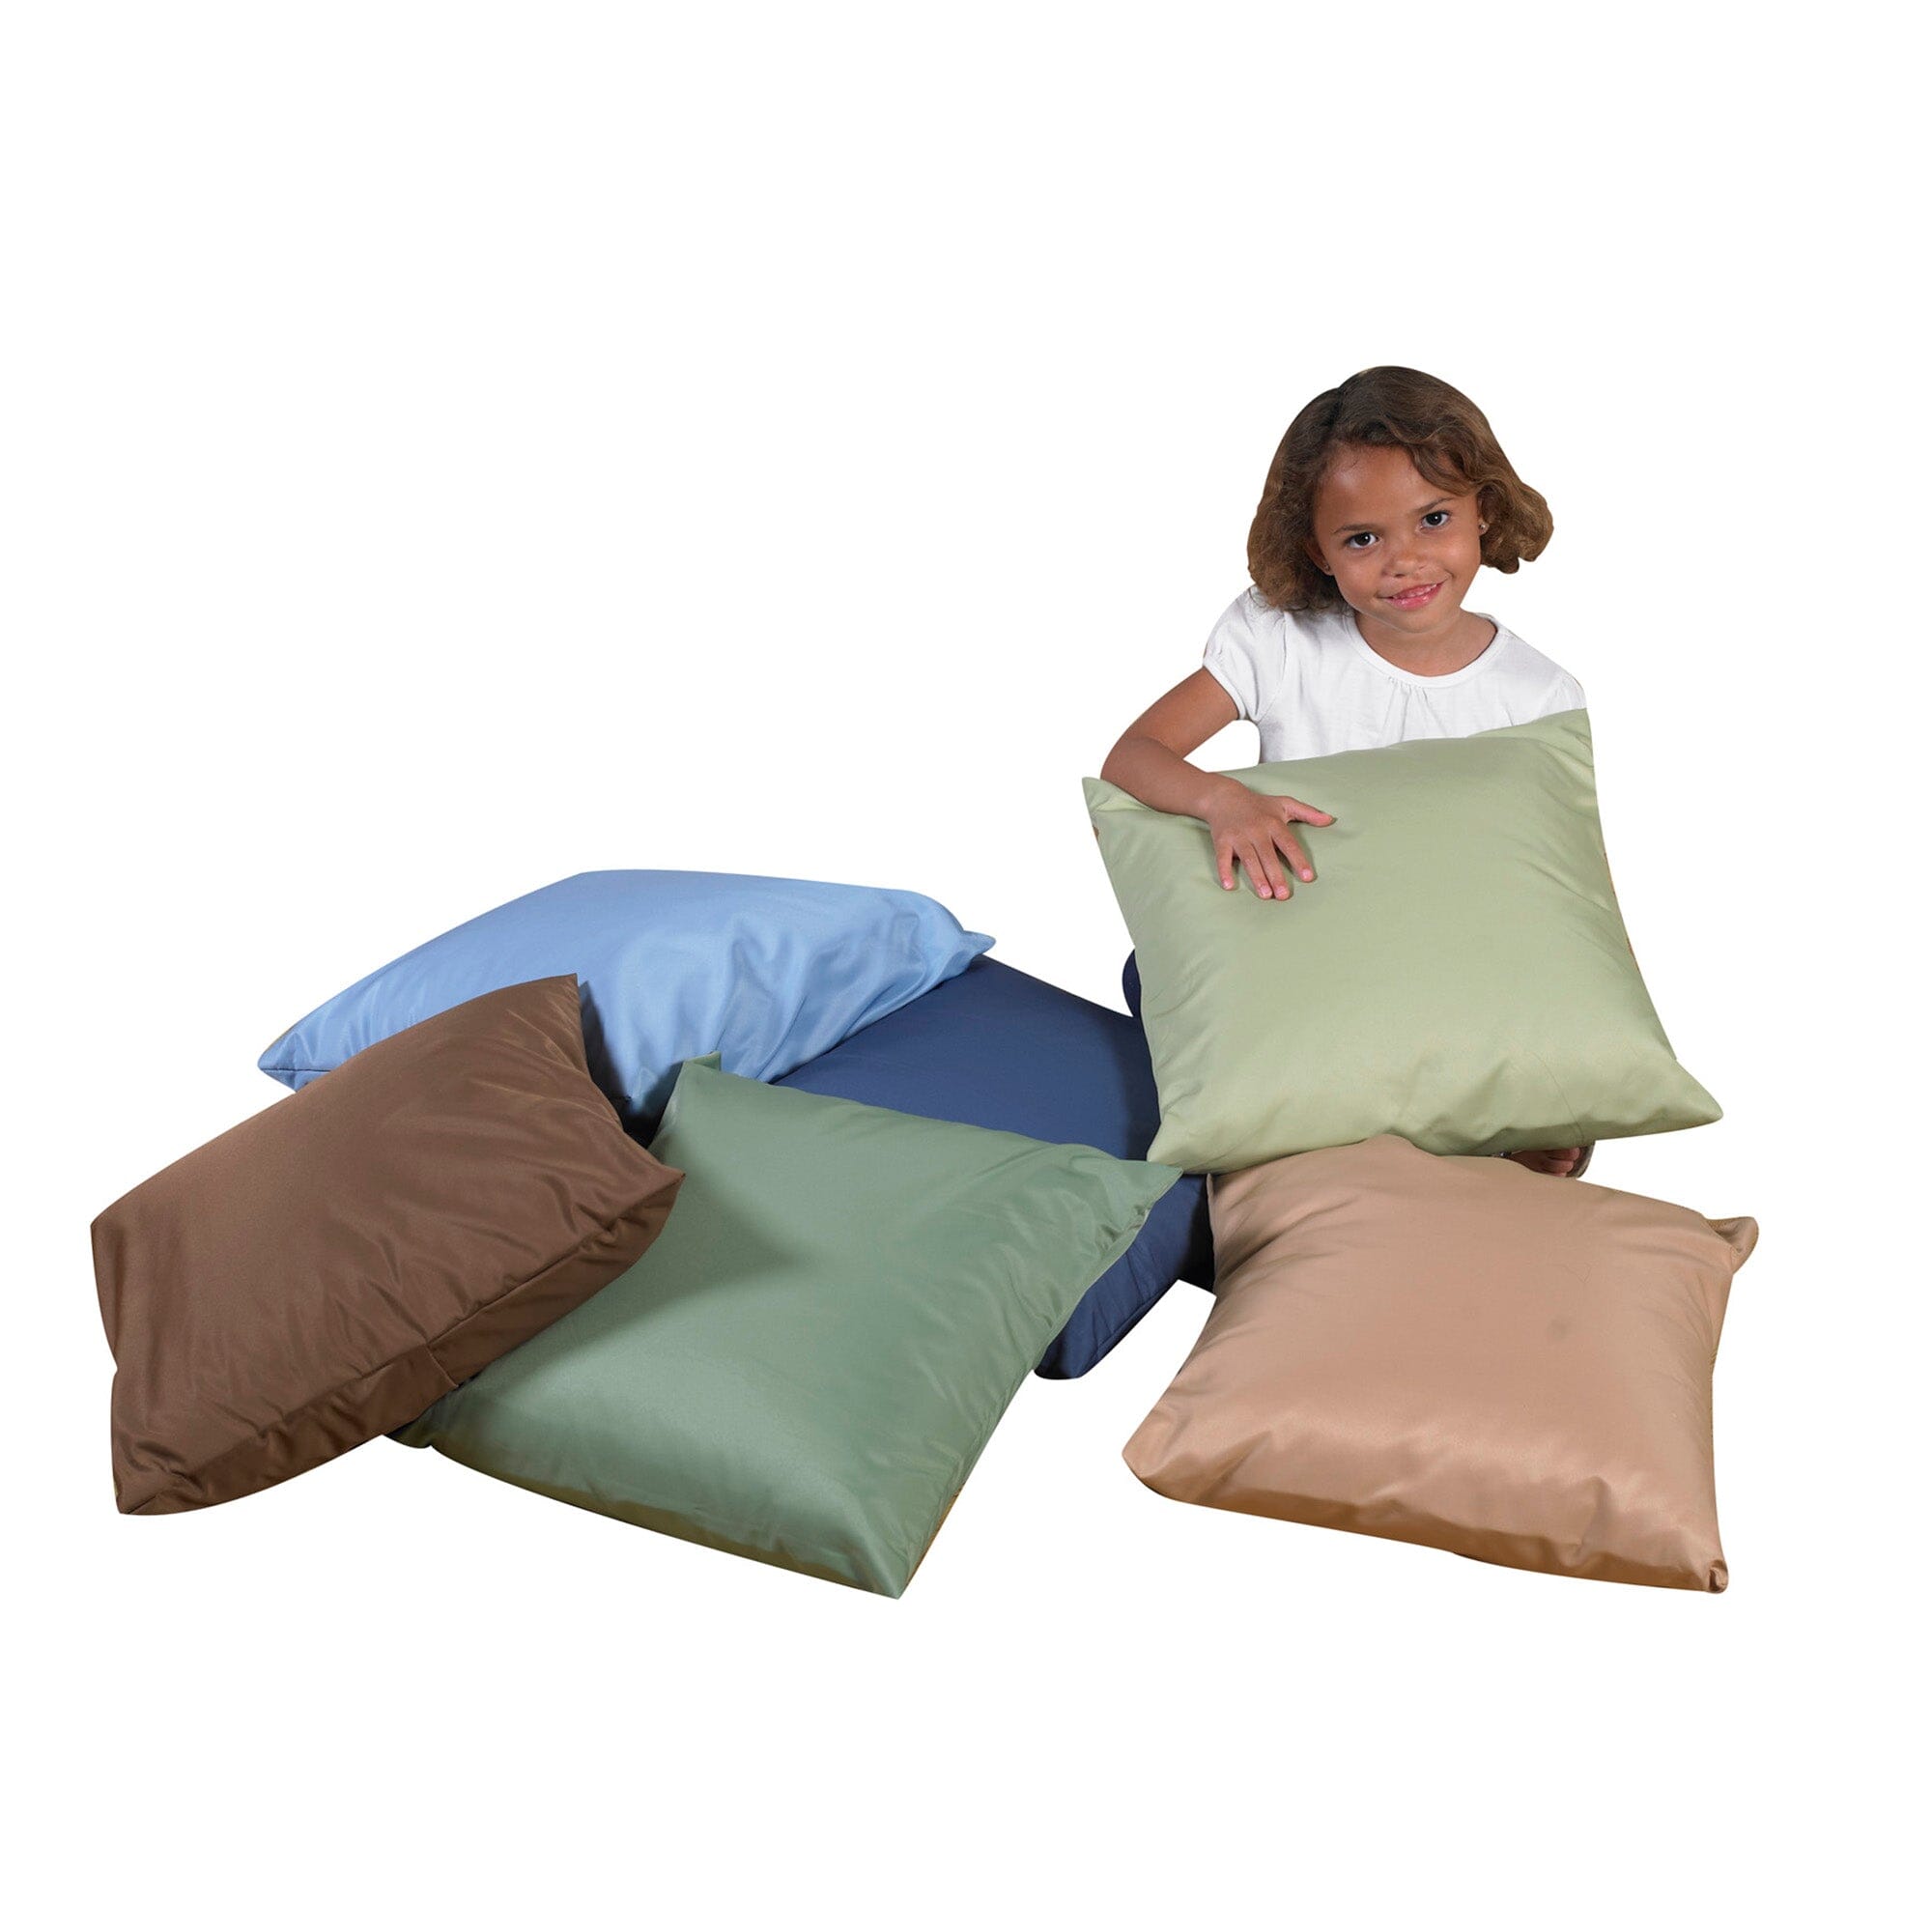 Woodland Square Floor Pillows - Set of 6 - louisekool